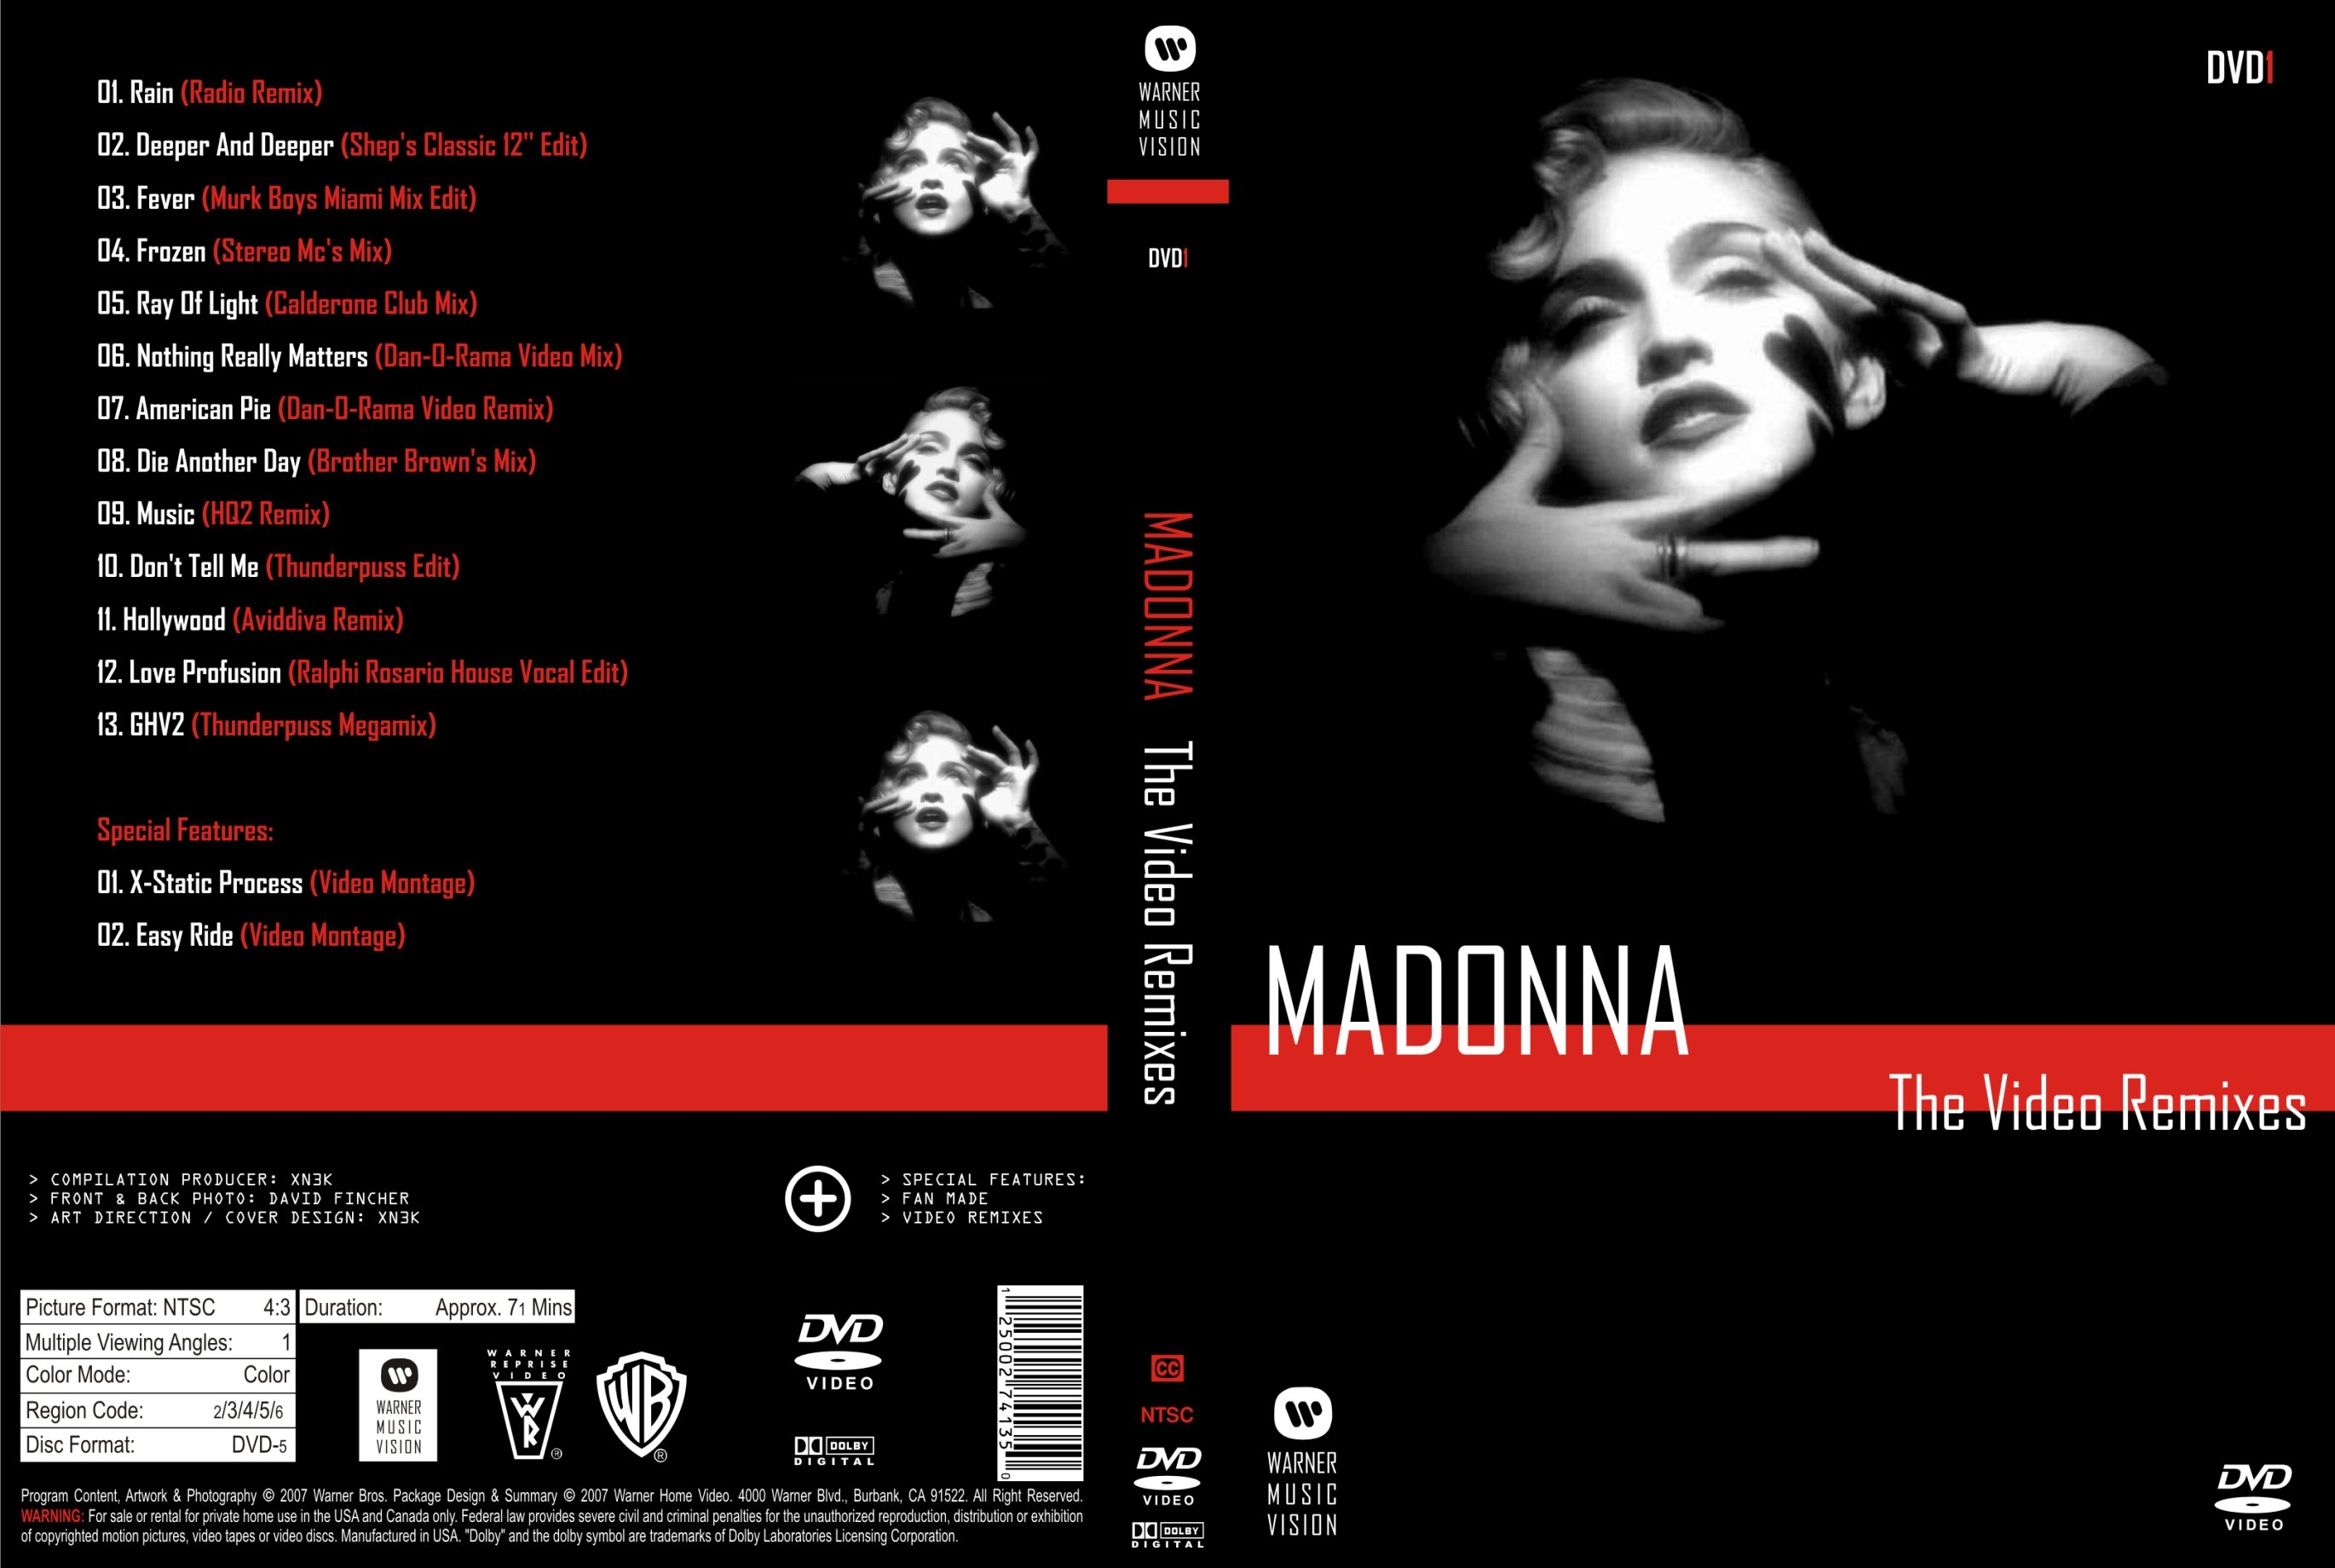 Jaquette DVD Madonna - The Video Remixes DVD 1